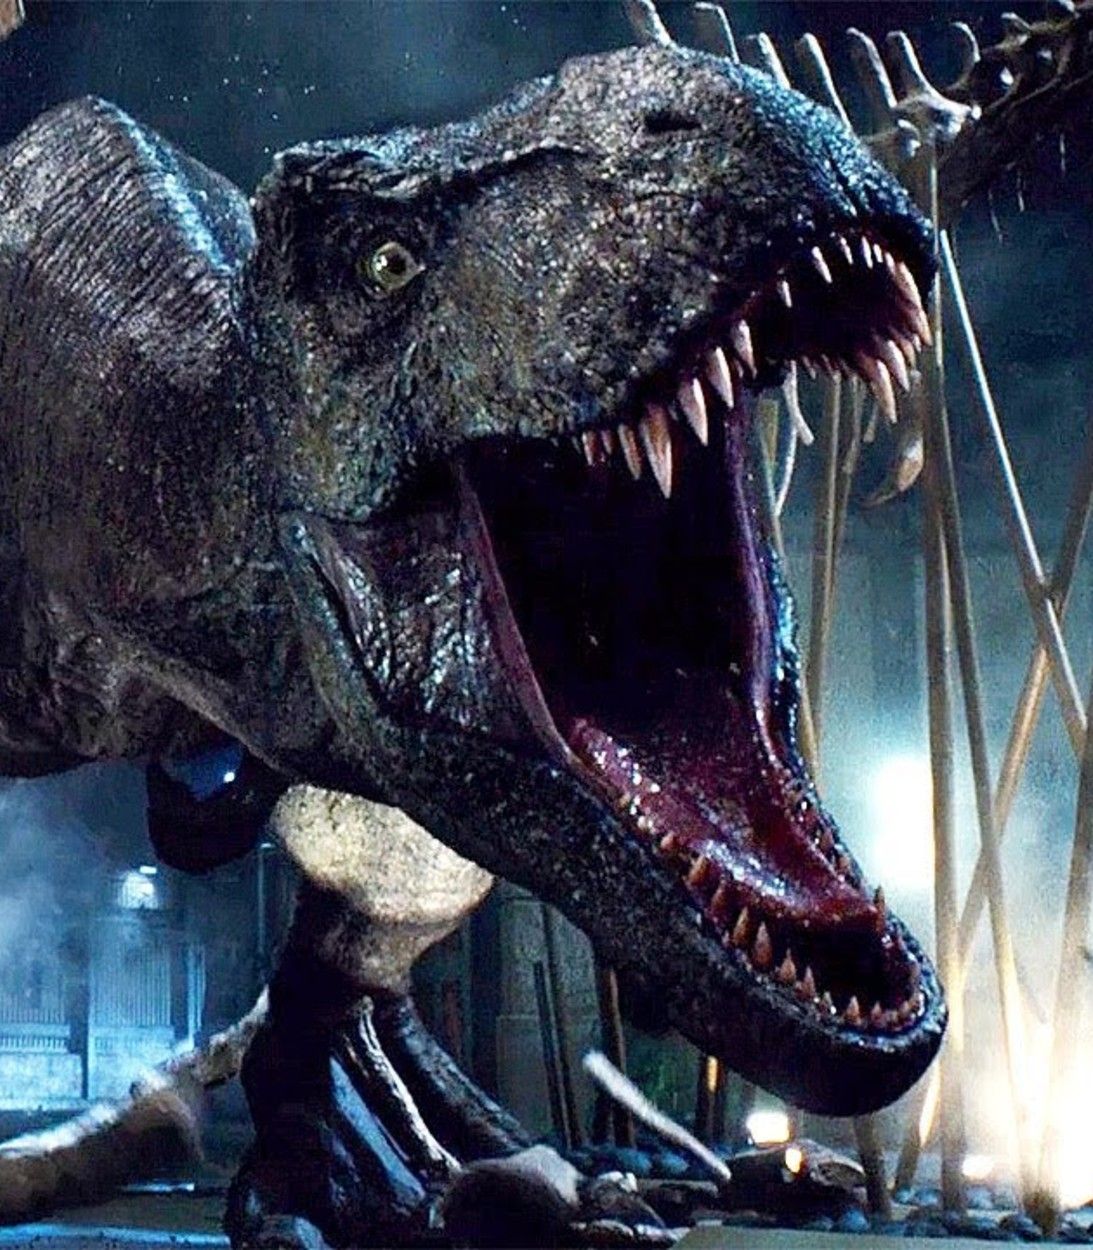 T-Rex smashes through Spinosaurus skeleton in Jurassic World pic vertical